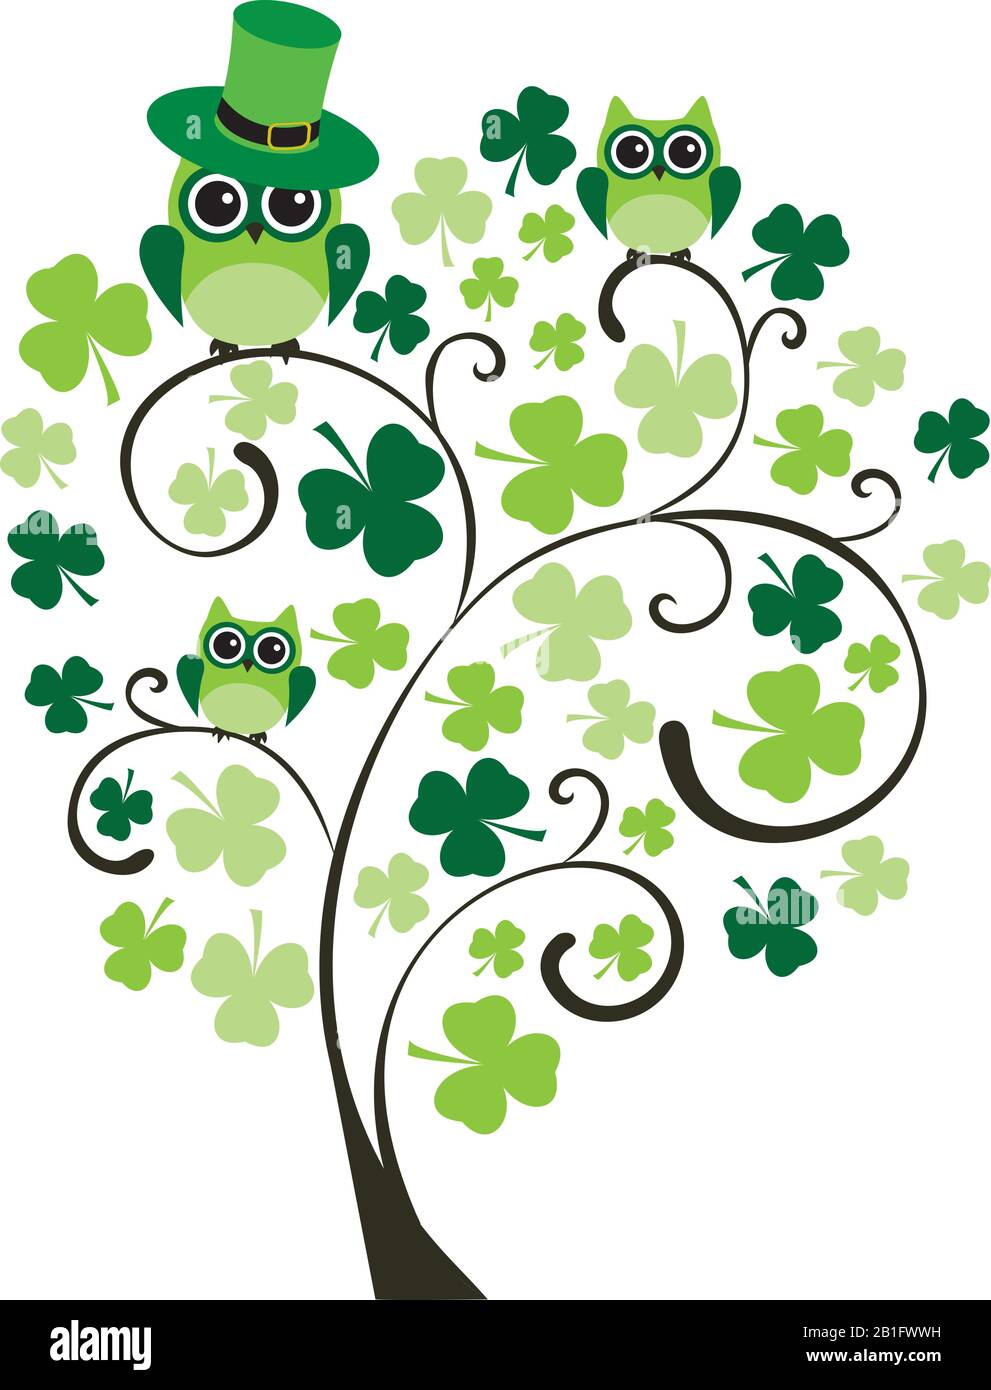 Vektordarstellung eines grünen Baumes mit Eulen, Shamrocks. St. Patrick's Day Celebration. Stock Vektor